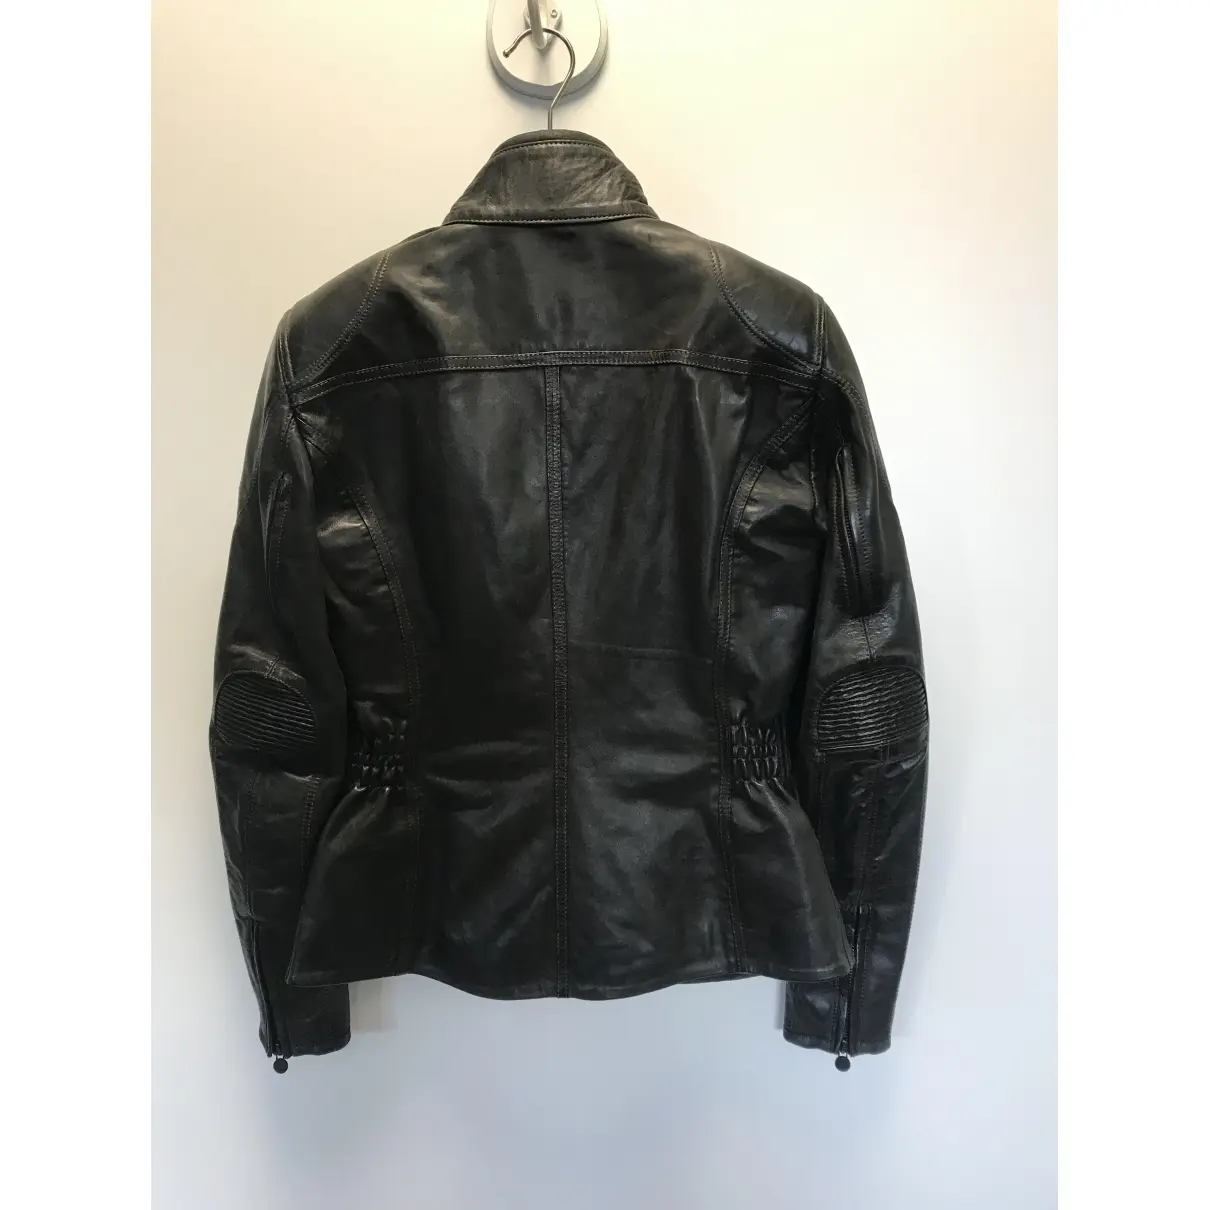 Buy Matchless Leather biker jacket online